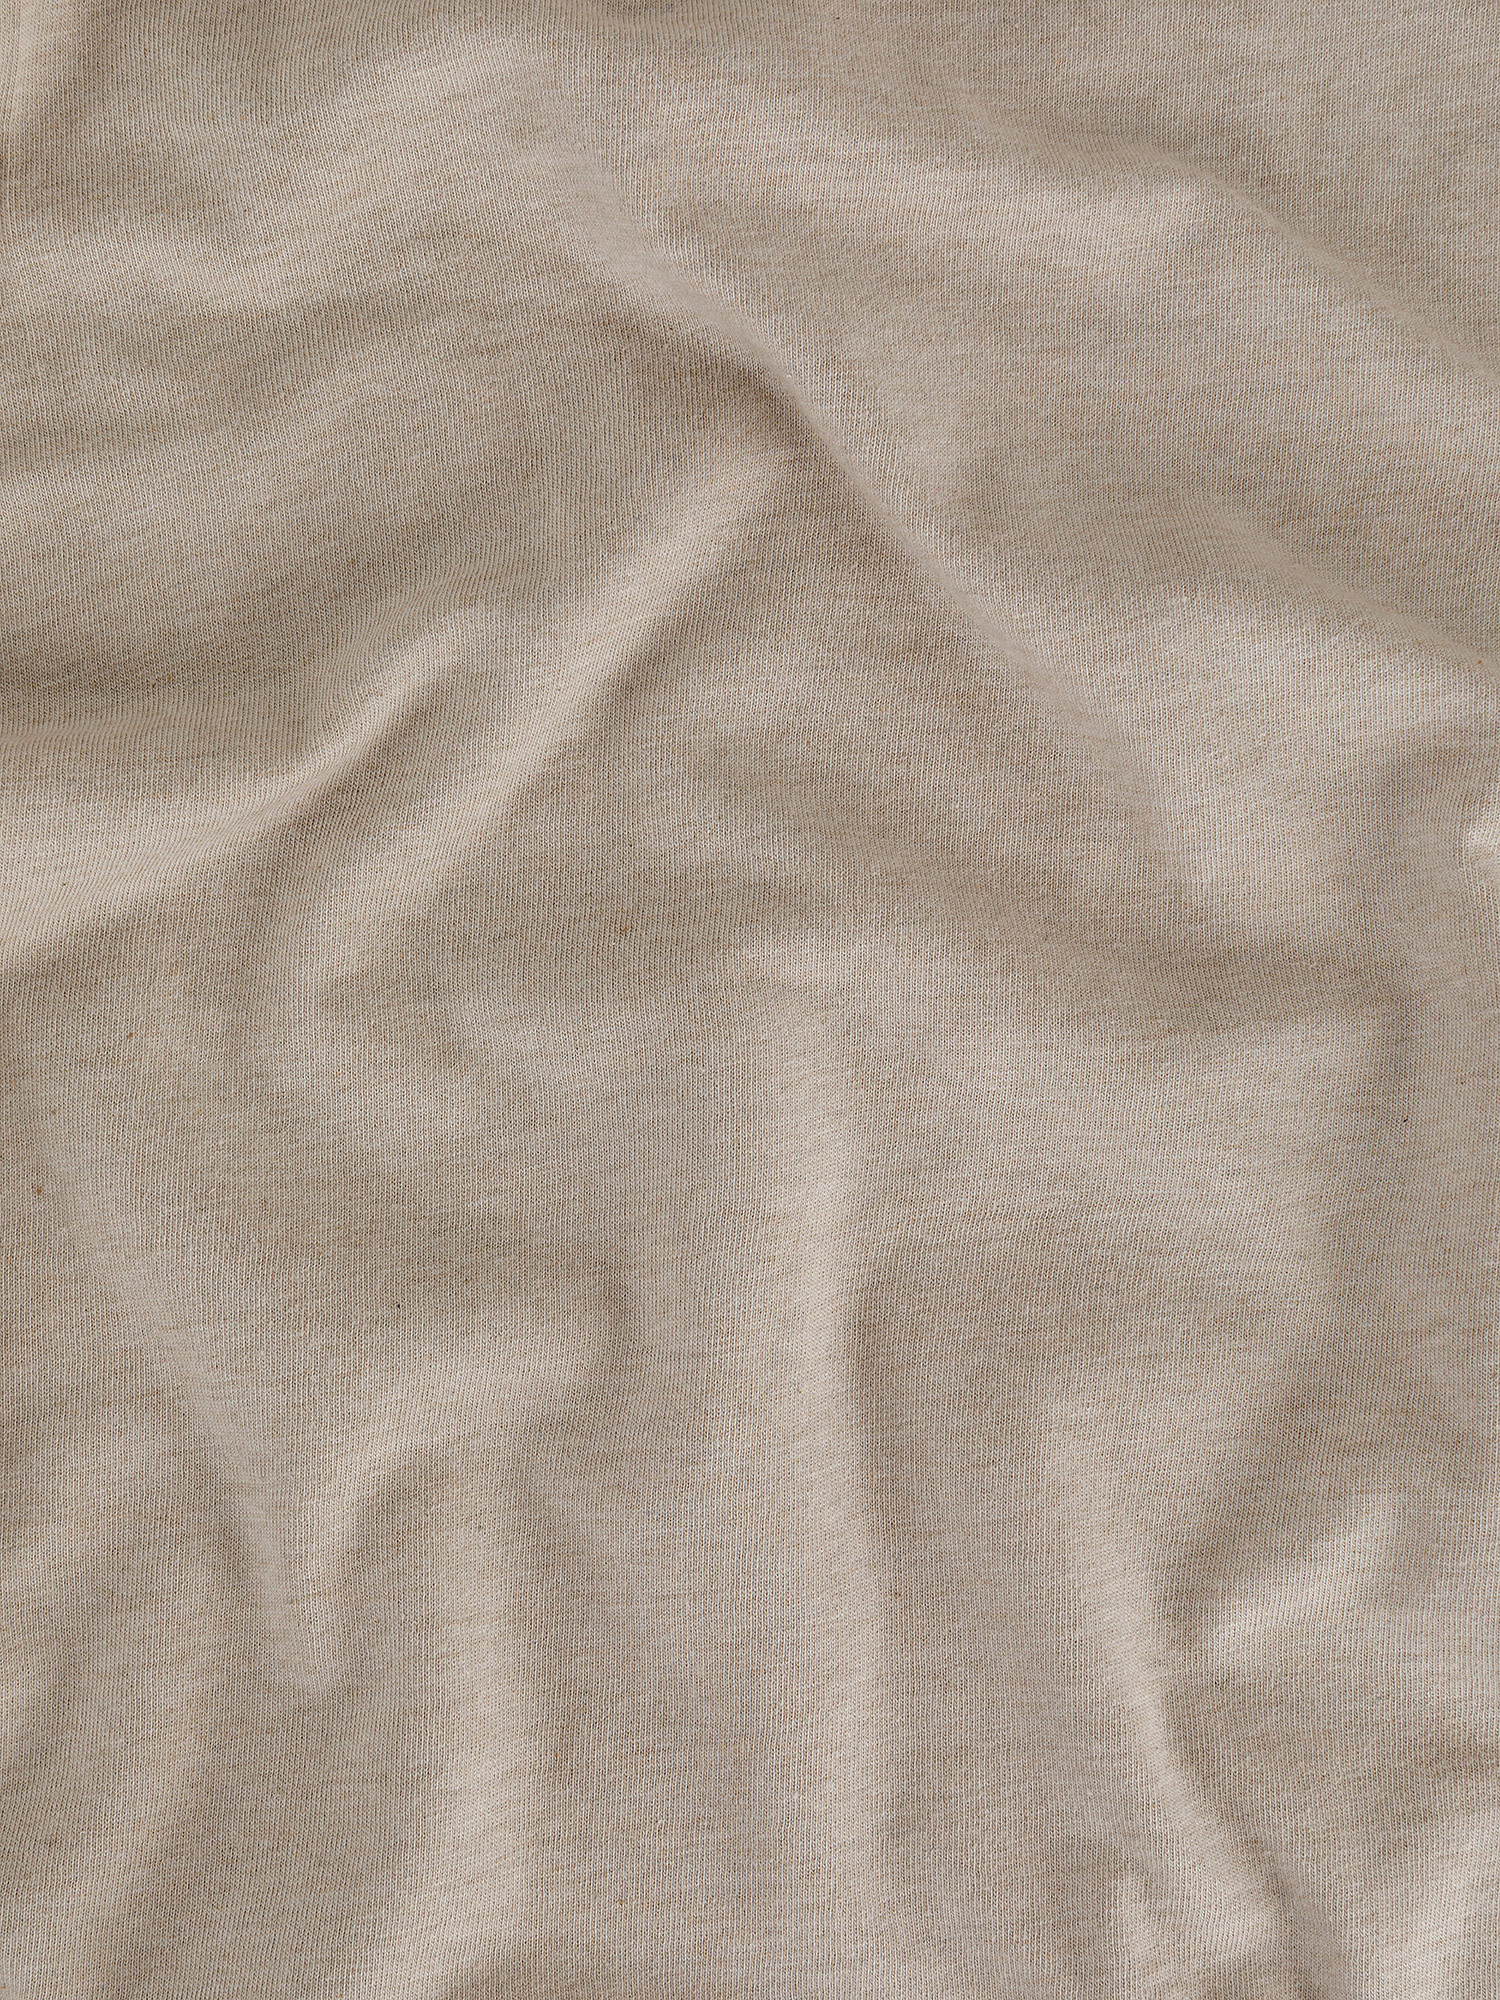 Parure copripiumino jersey di cotone tinta unita, Beige, large image number 2